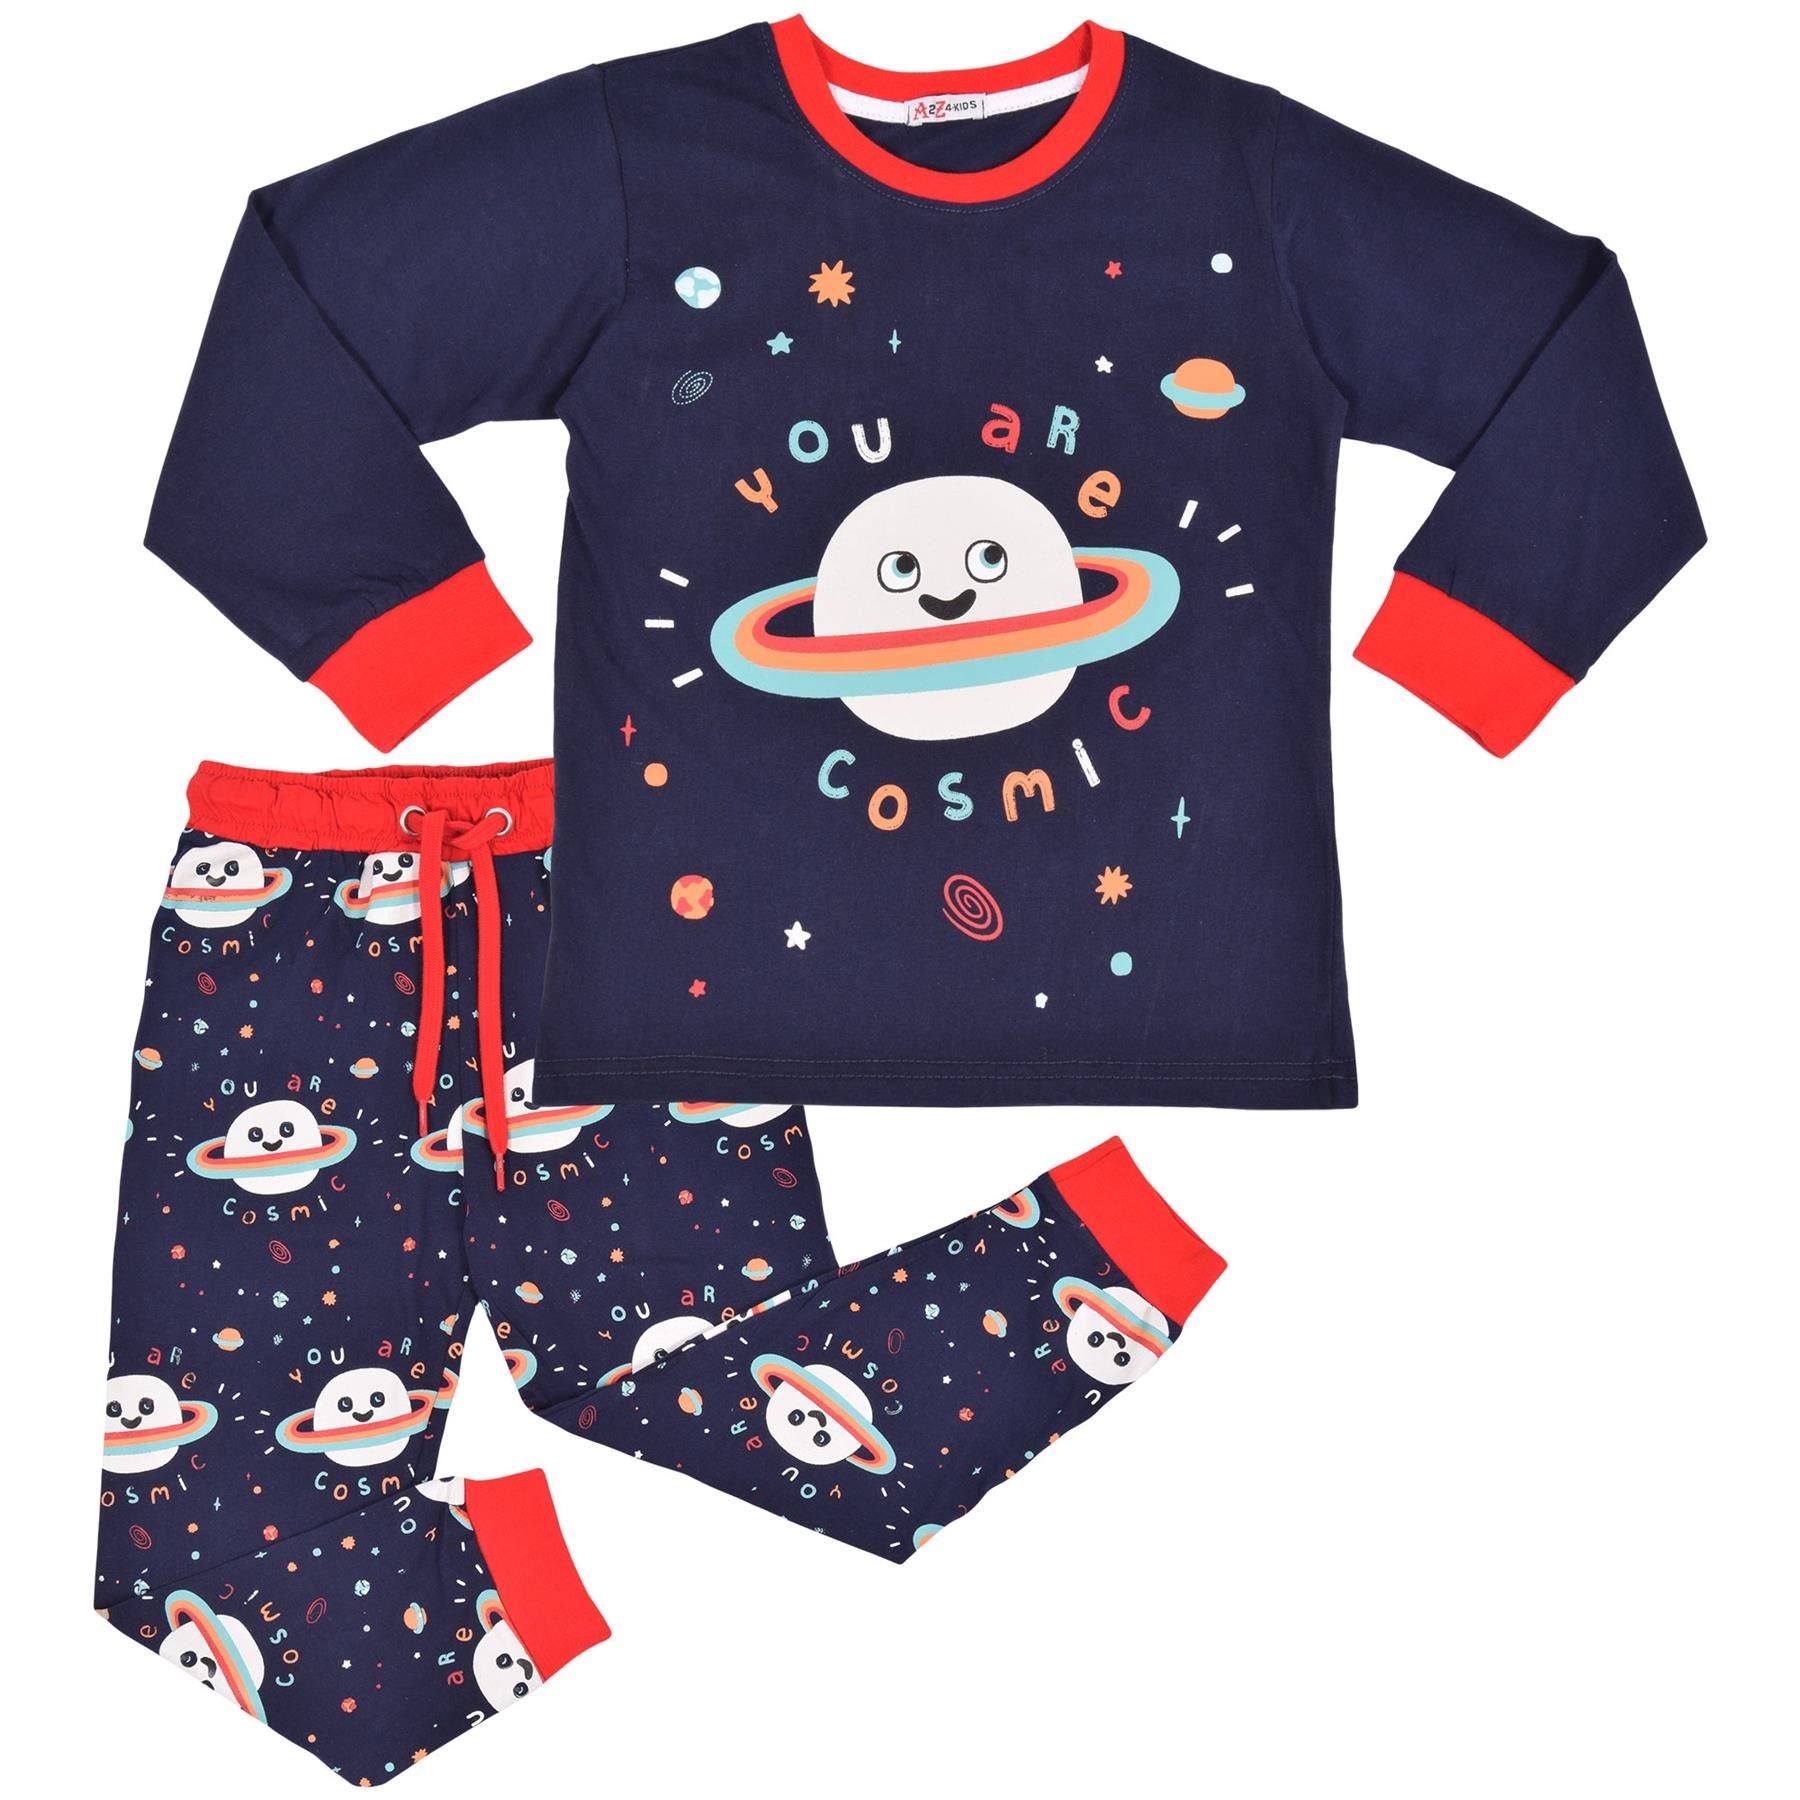 Kids Girls Boys Pyjamas You Are Cosmic Contrast Top Bottom PJS Sleepwear Set